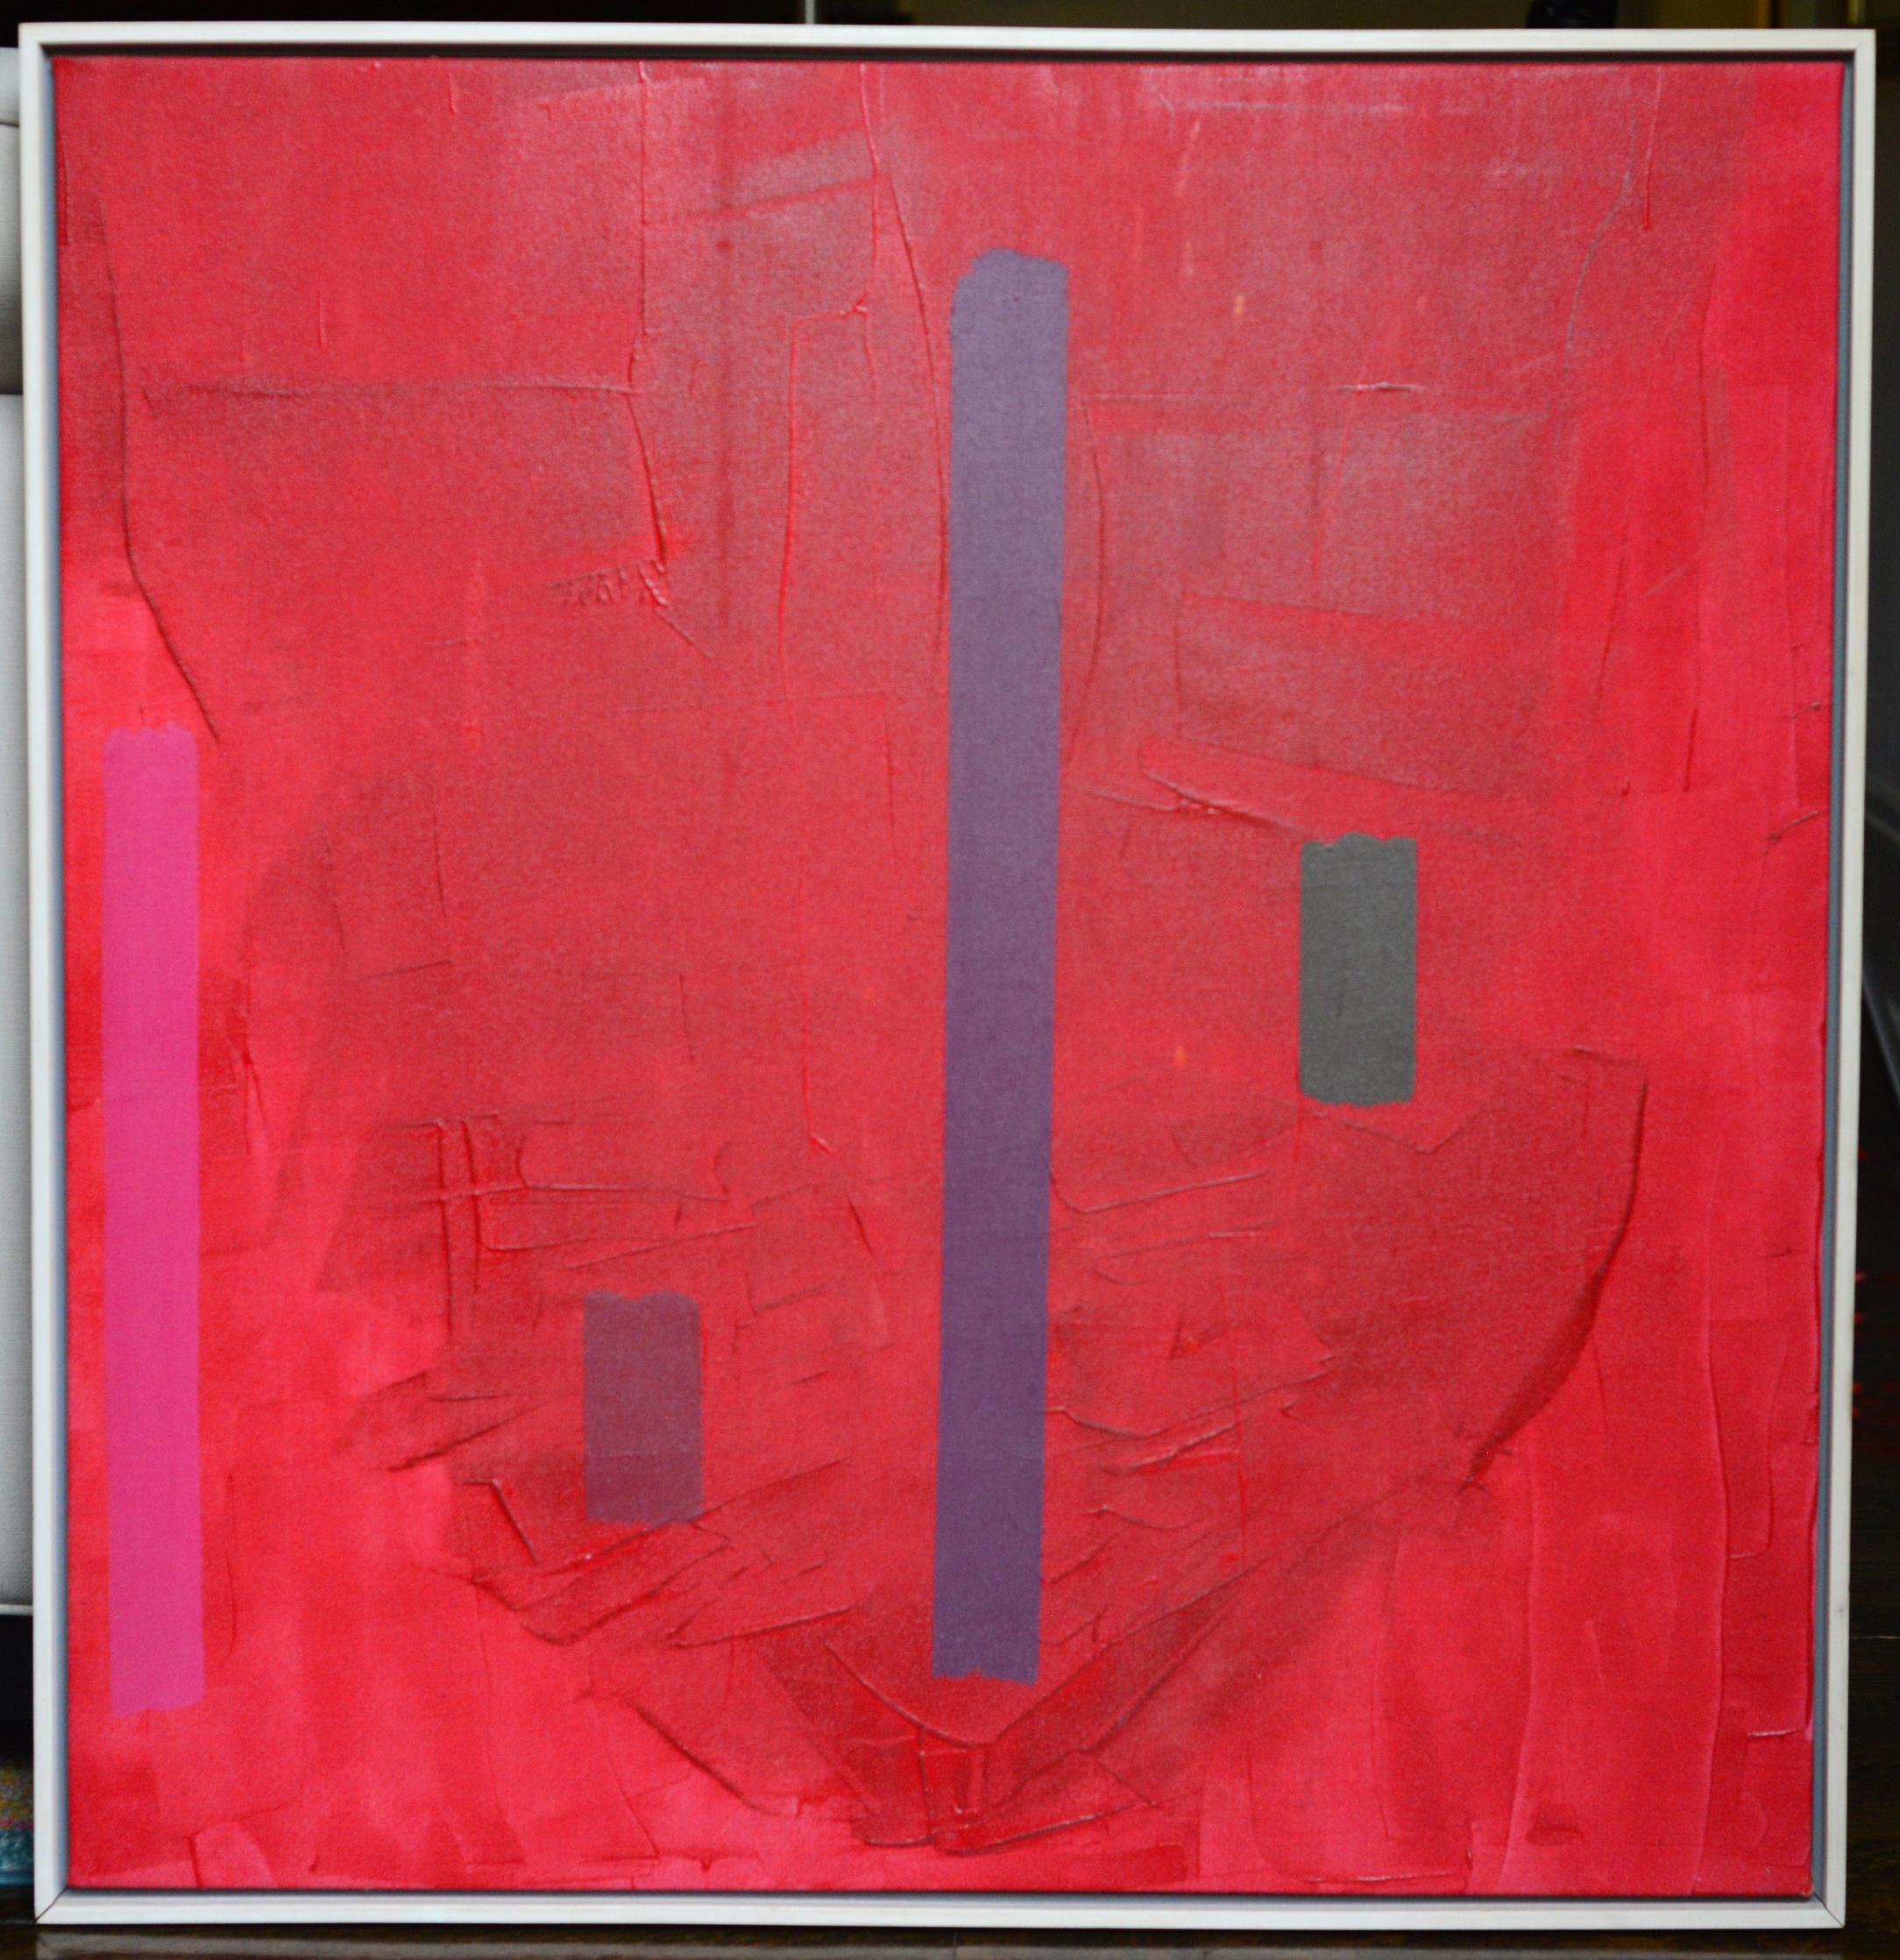 William Perehudoff (Canadian 1918-2013)
Medium: Acrylic on canvas
Dated: 1979
Size: 32